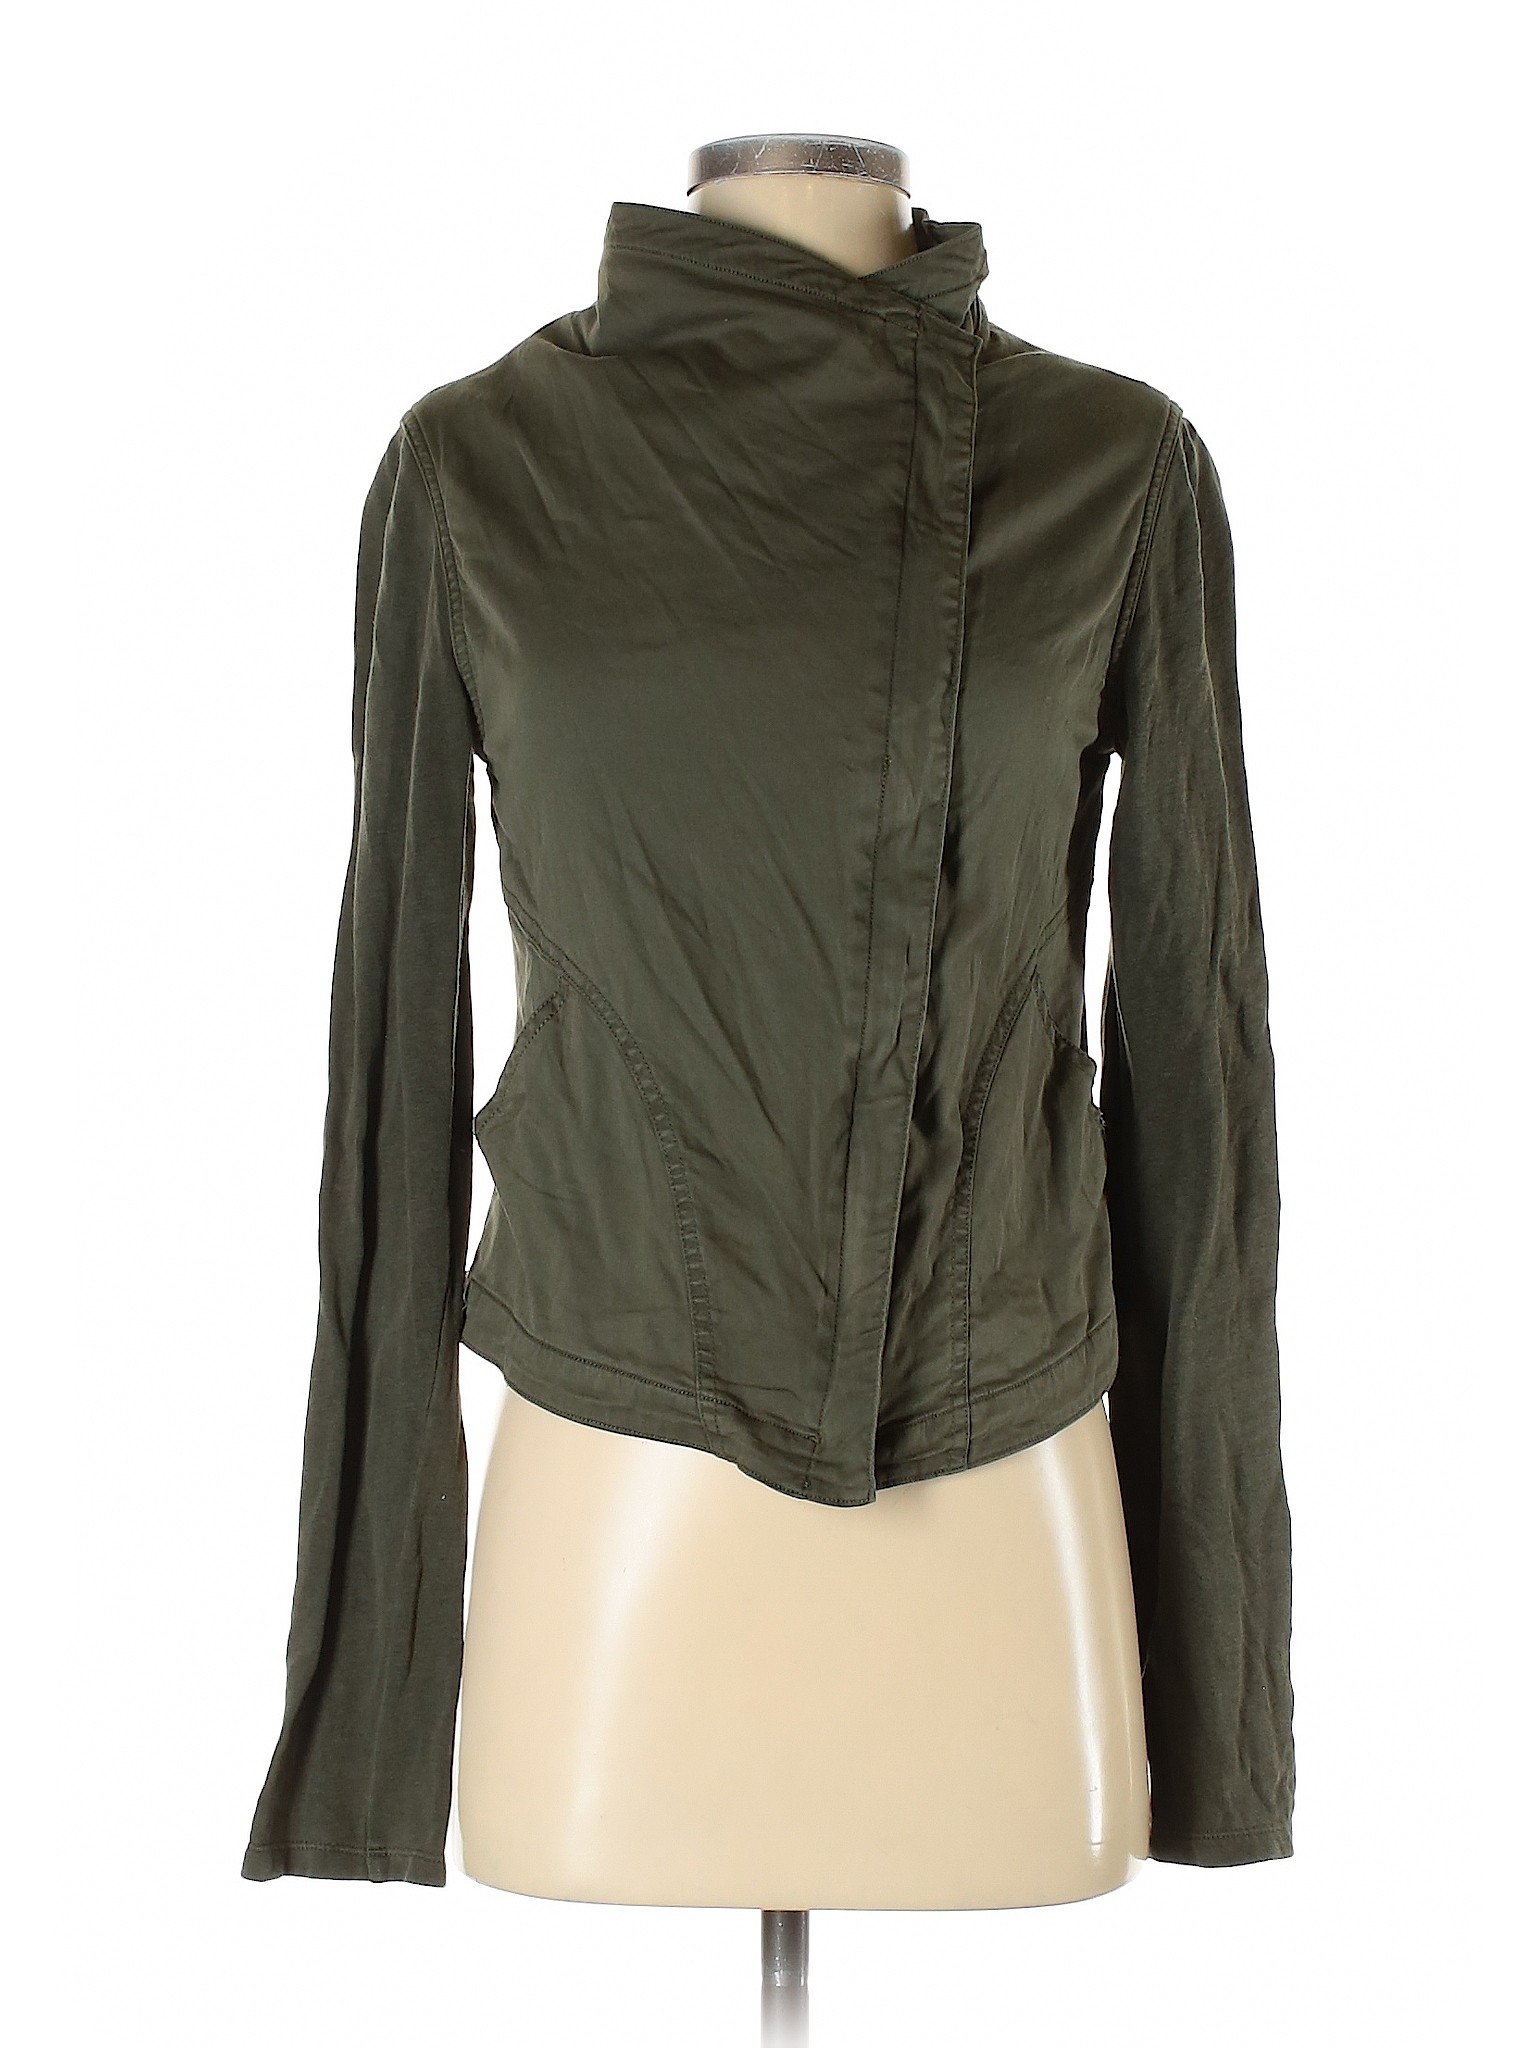 Thread & Supply Women Green Jacket S | eBay